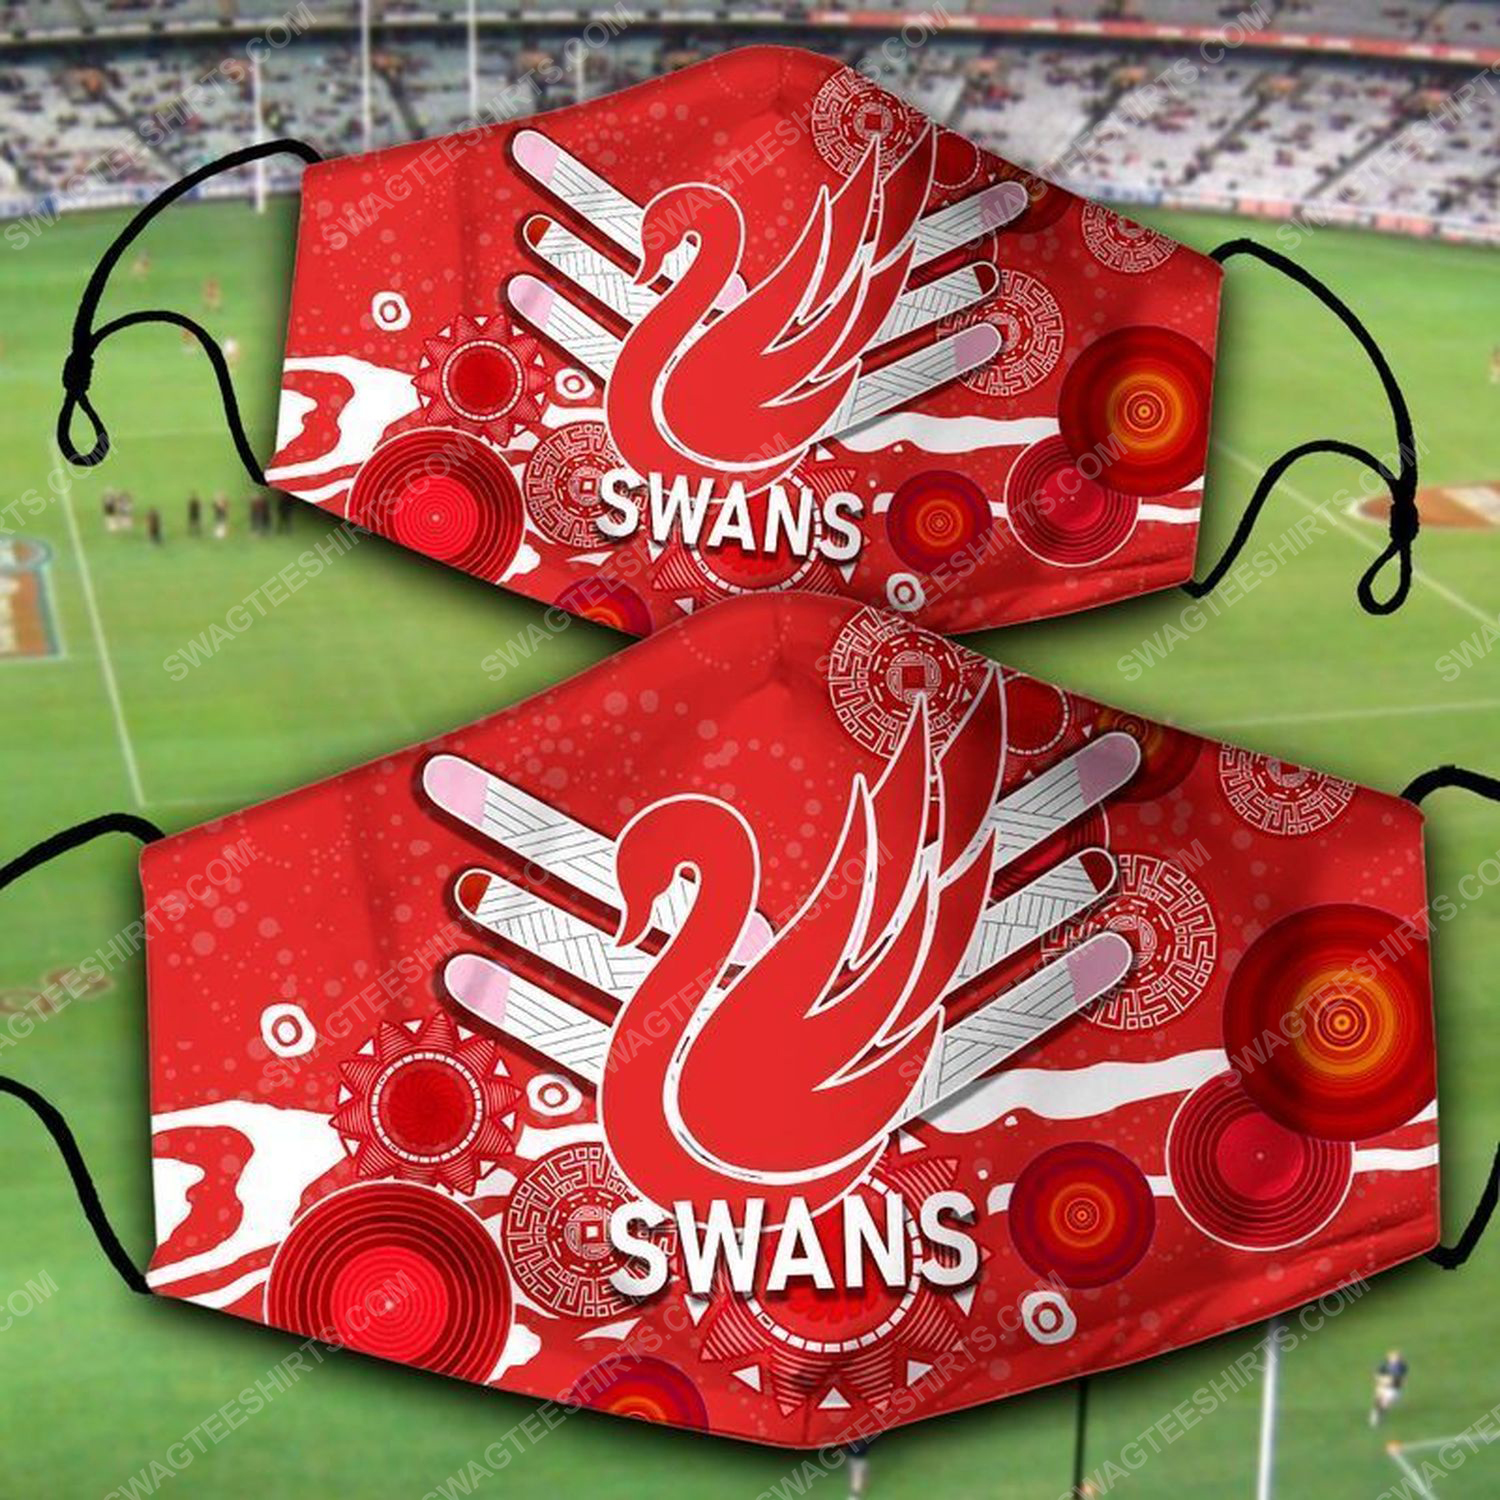 The sydney swans football club face mask